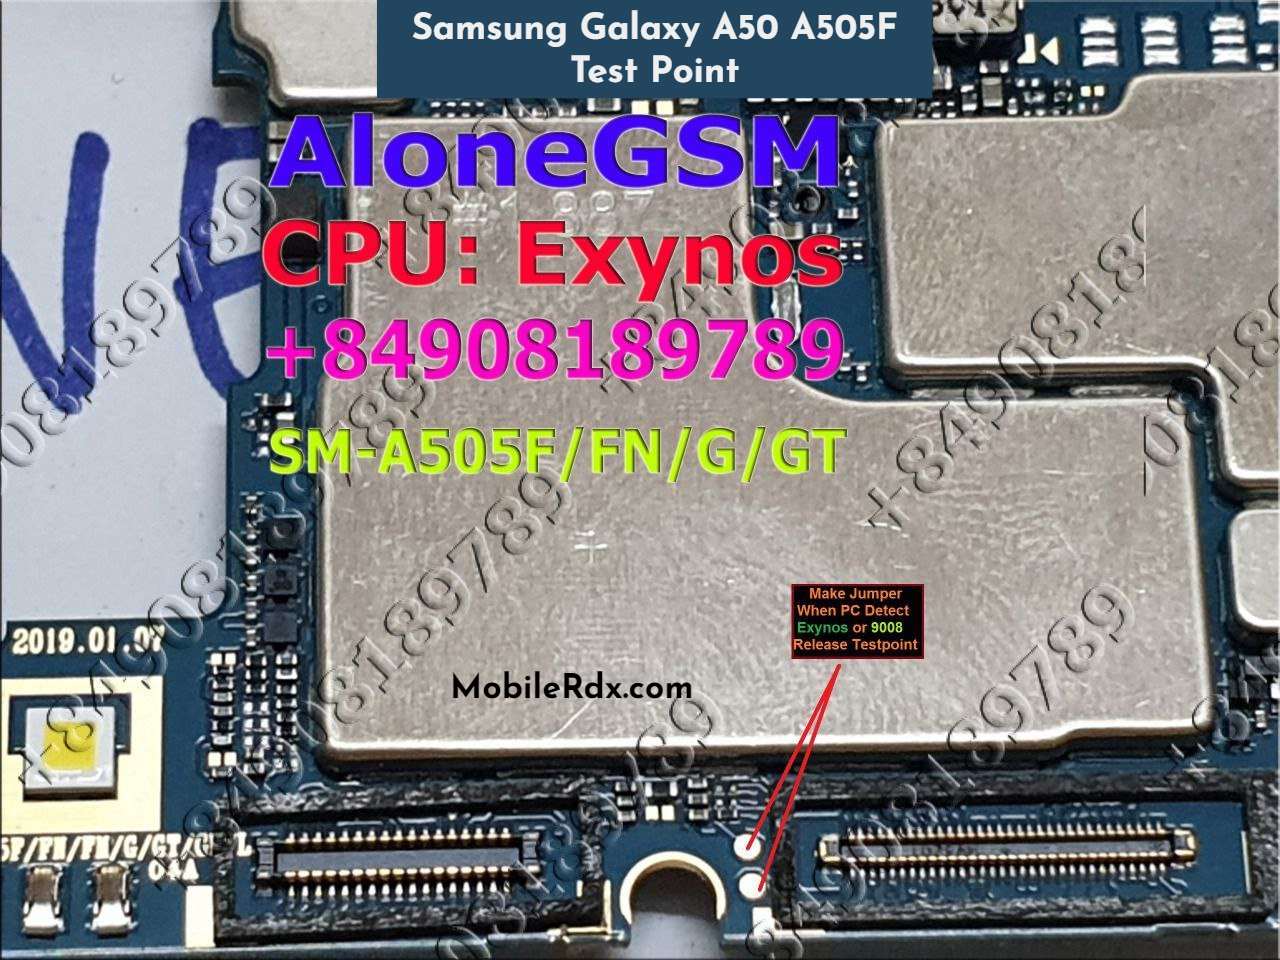 Samsung Galaxy A50 A505F Test Point EDL 9008 Mode